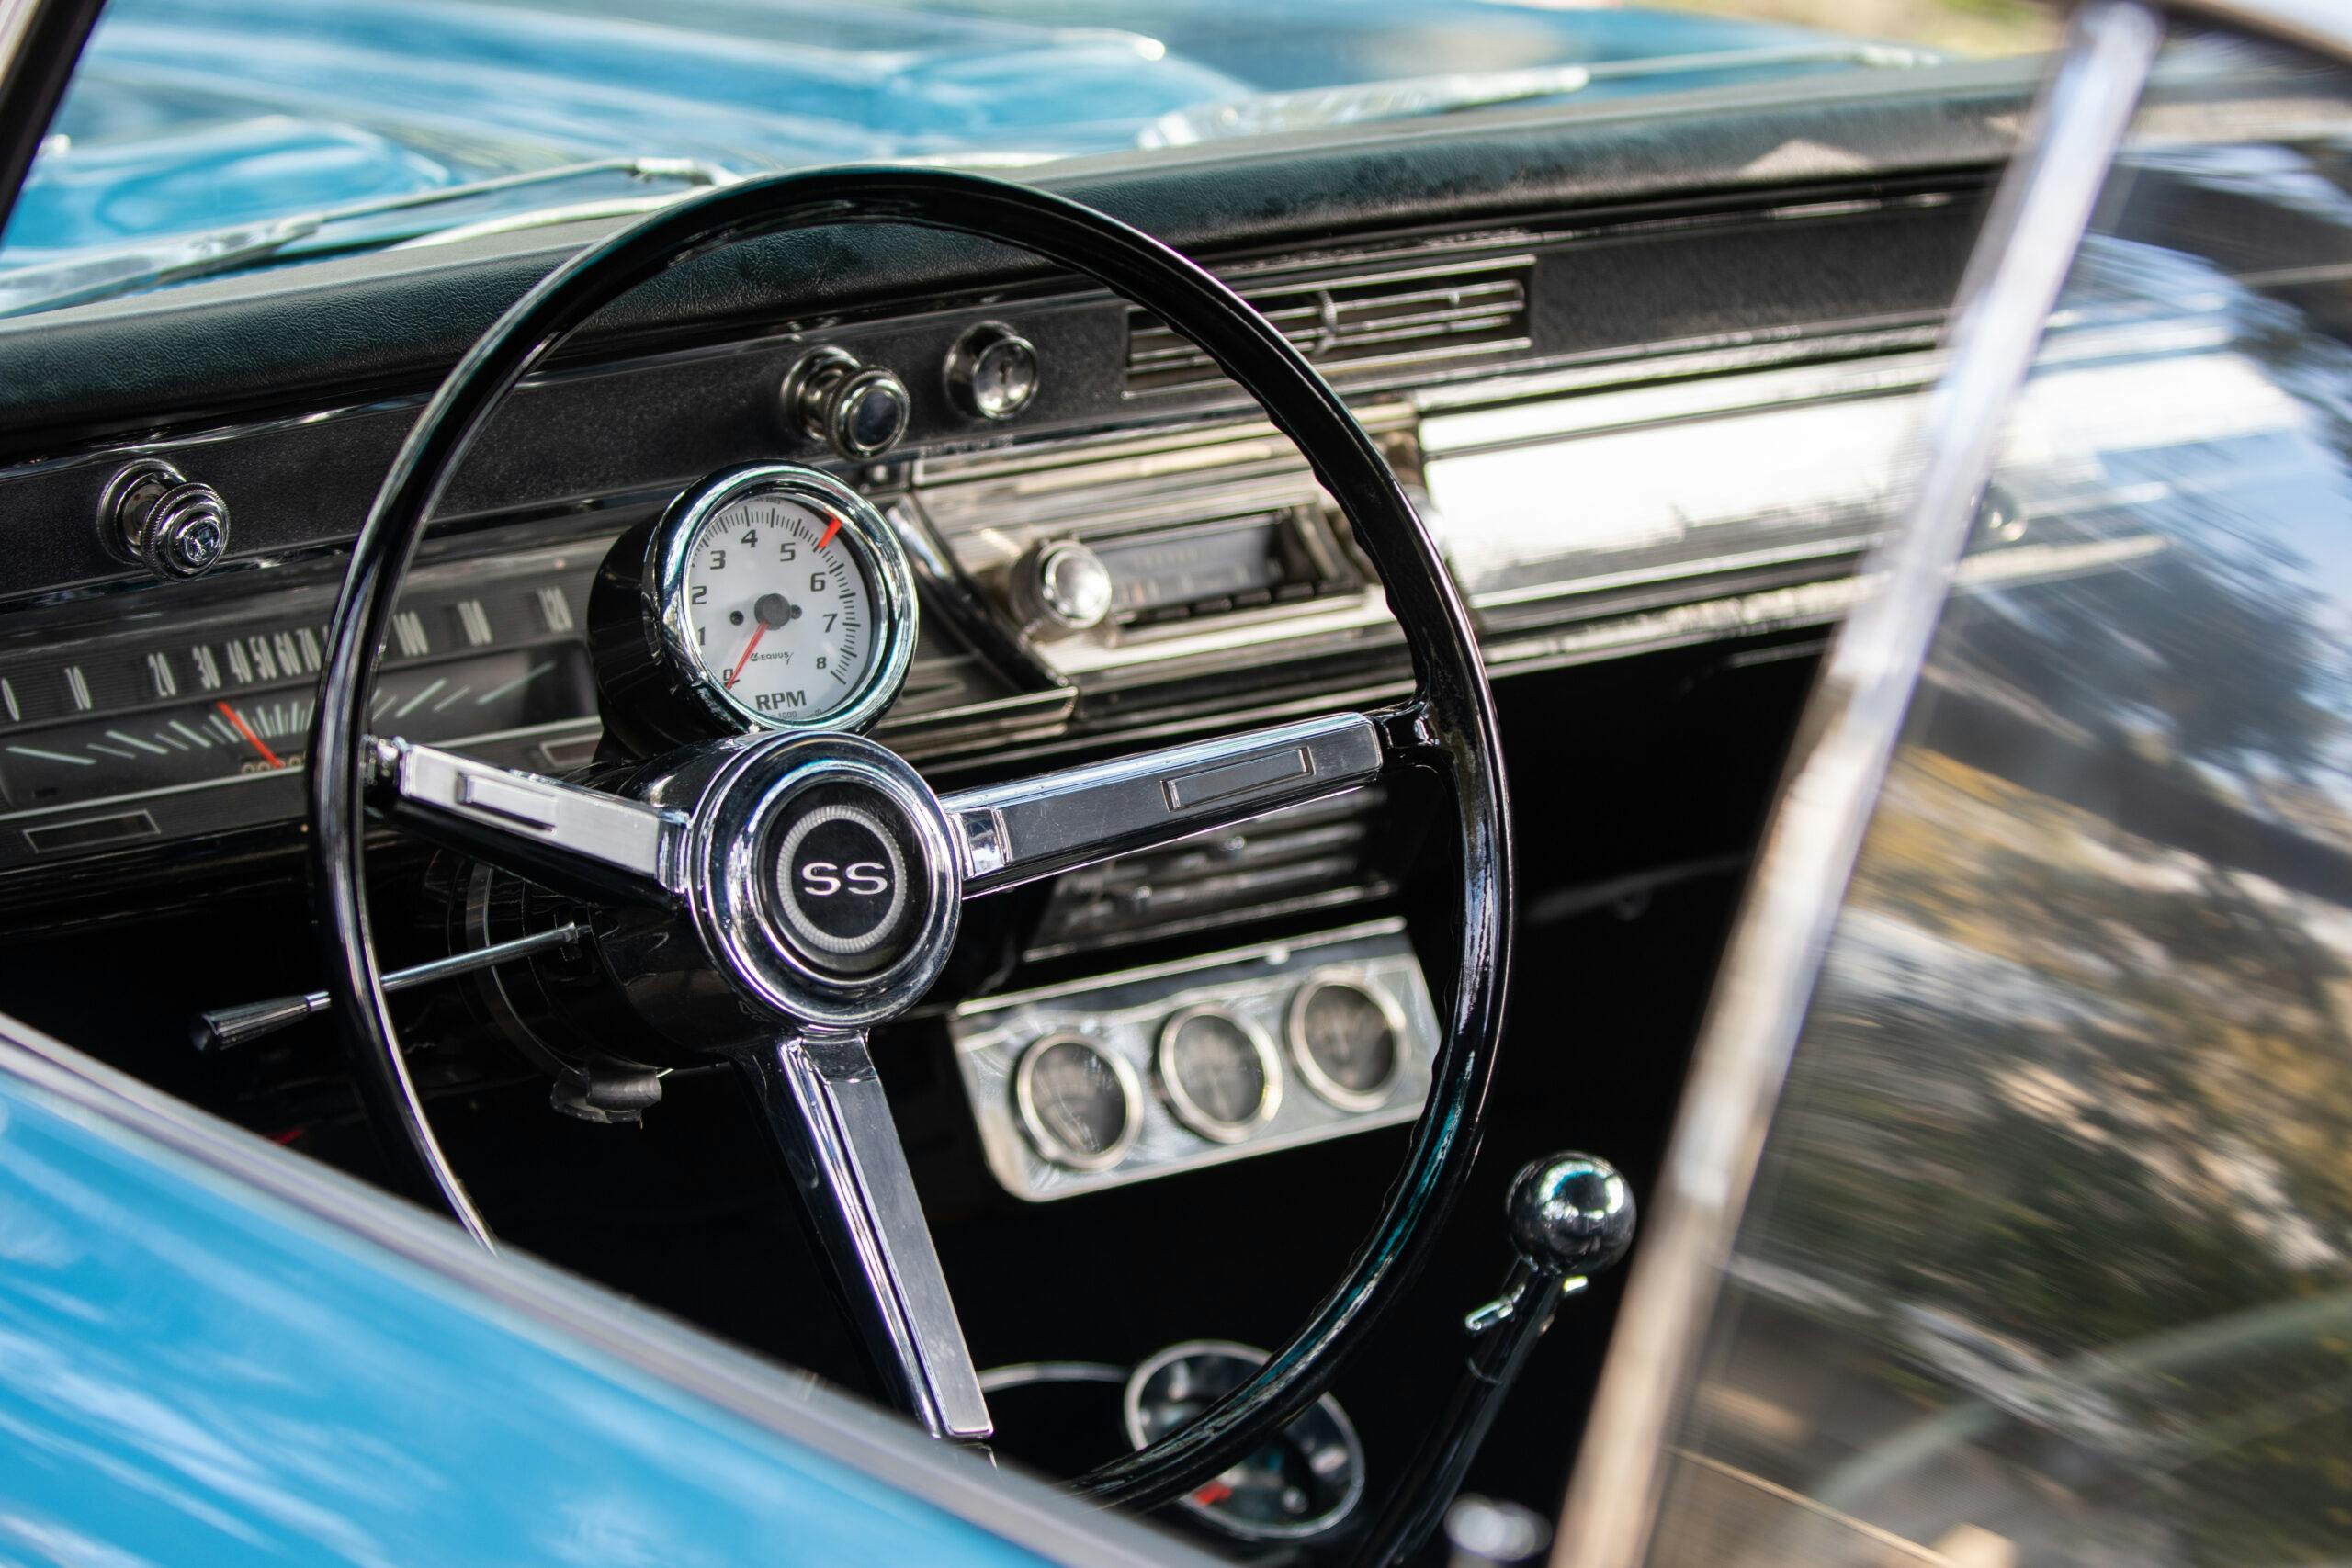 Chevelle SS interior steering wheel